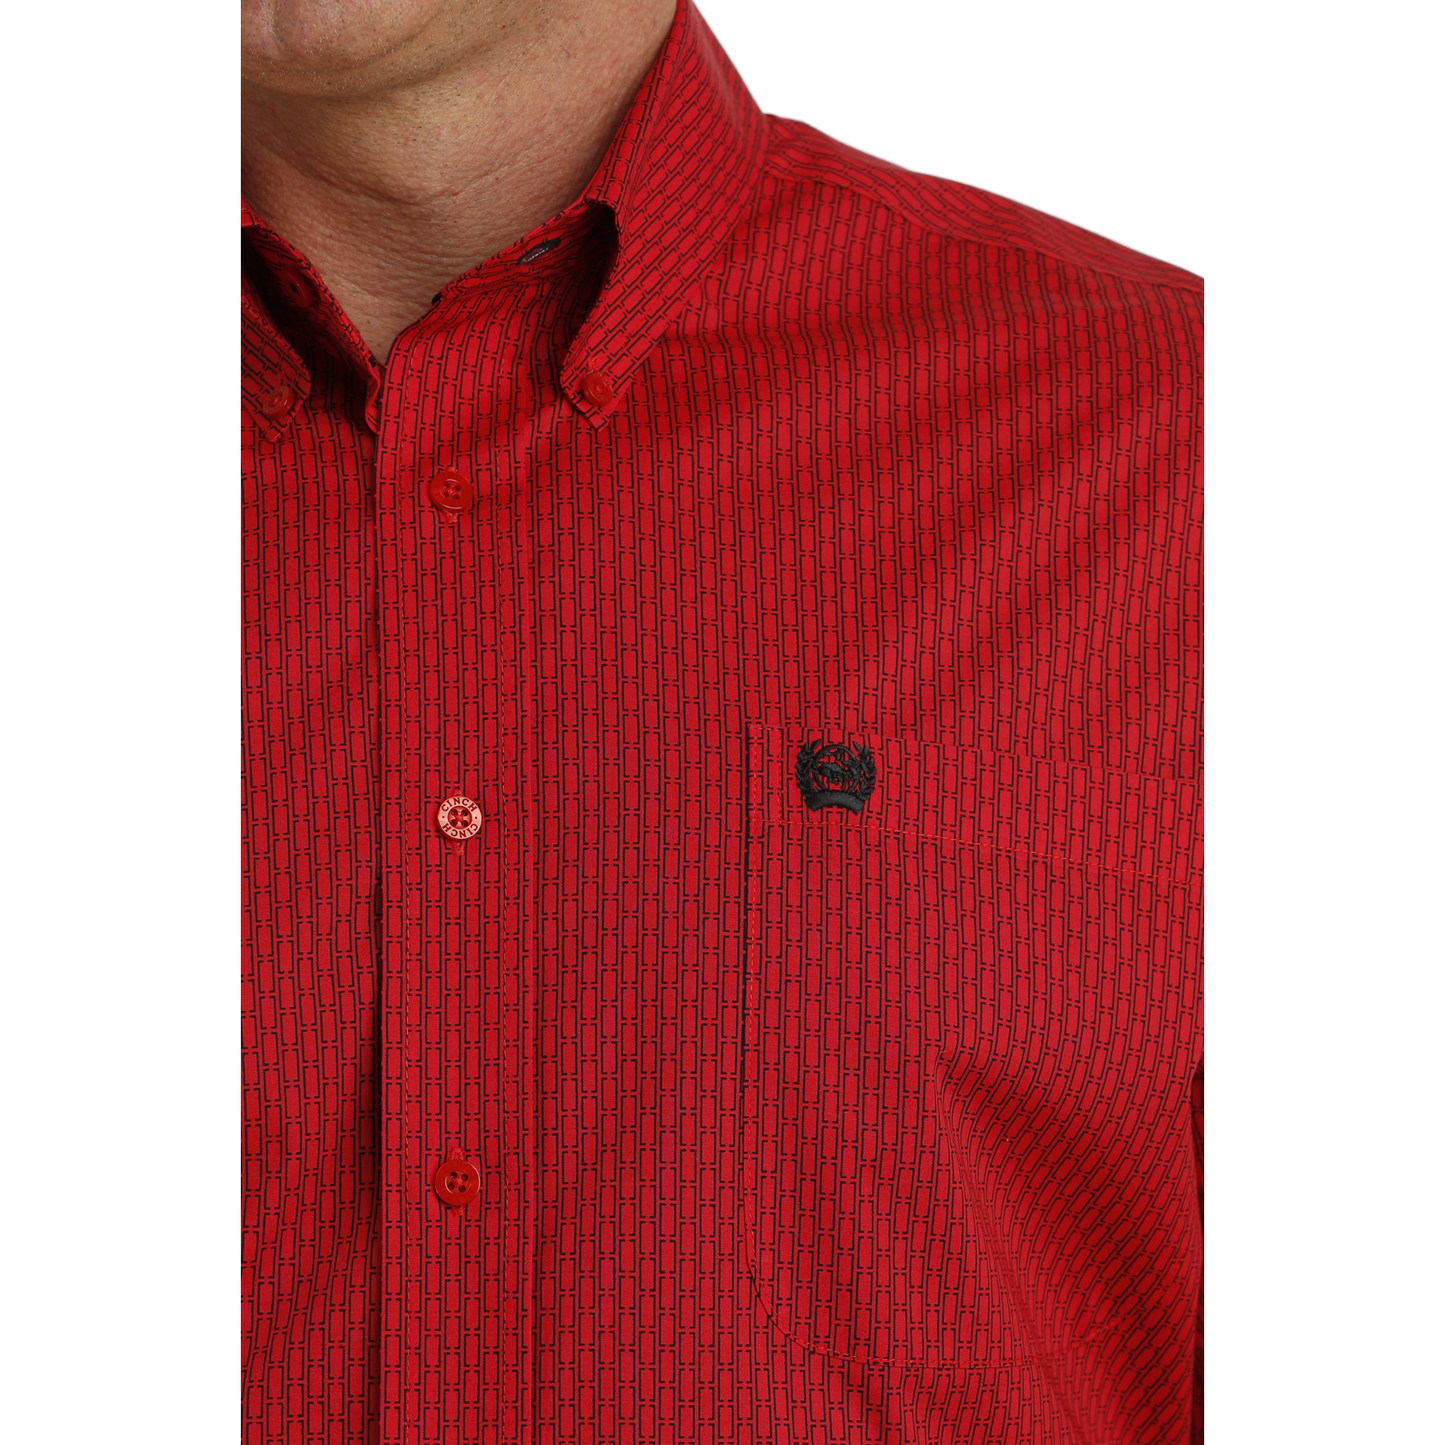 Cinch Men's Red Rectangle Print Button Down Shirt MTW1105729